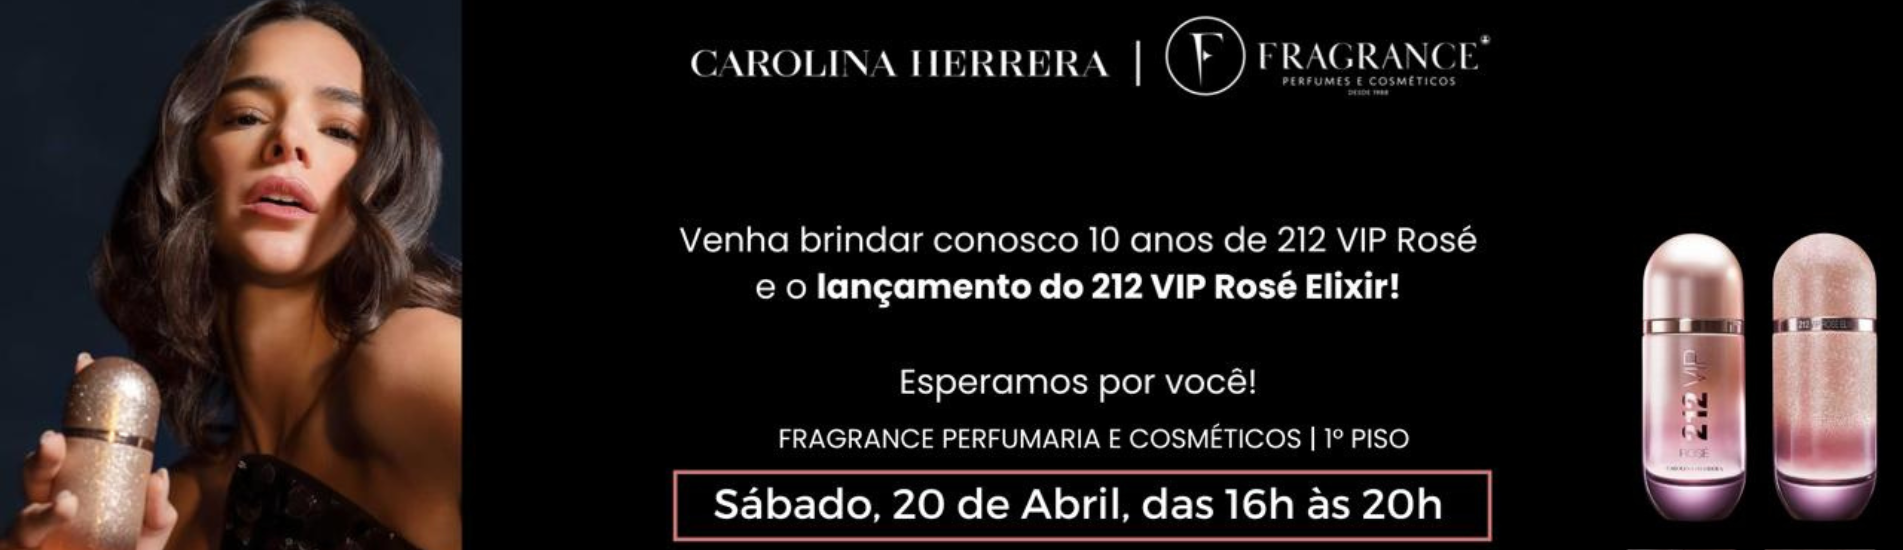 Lançamento Carolina Herrera | Fragrance